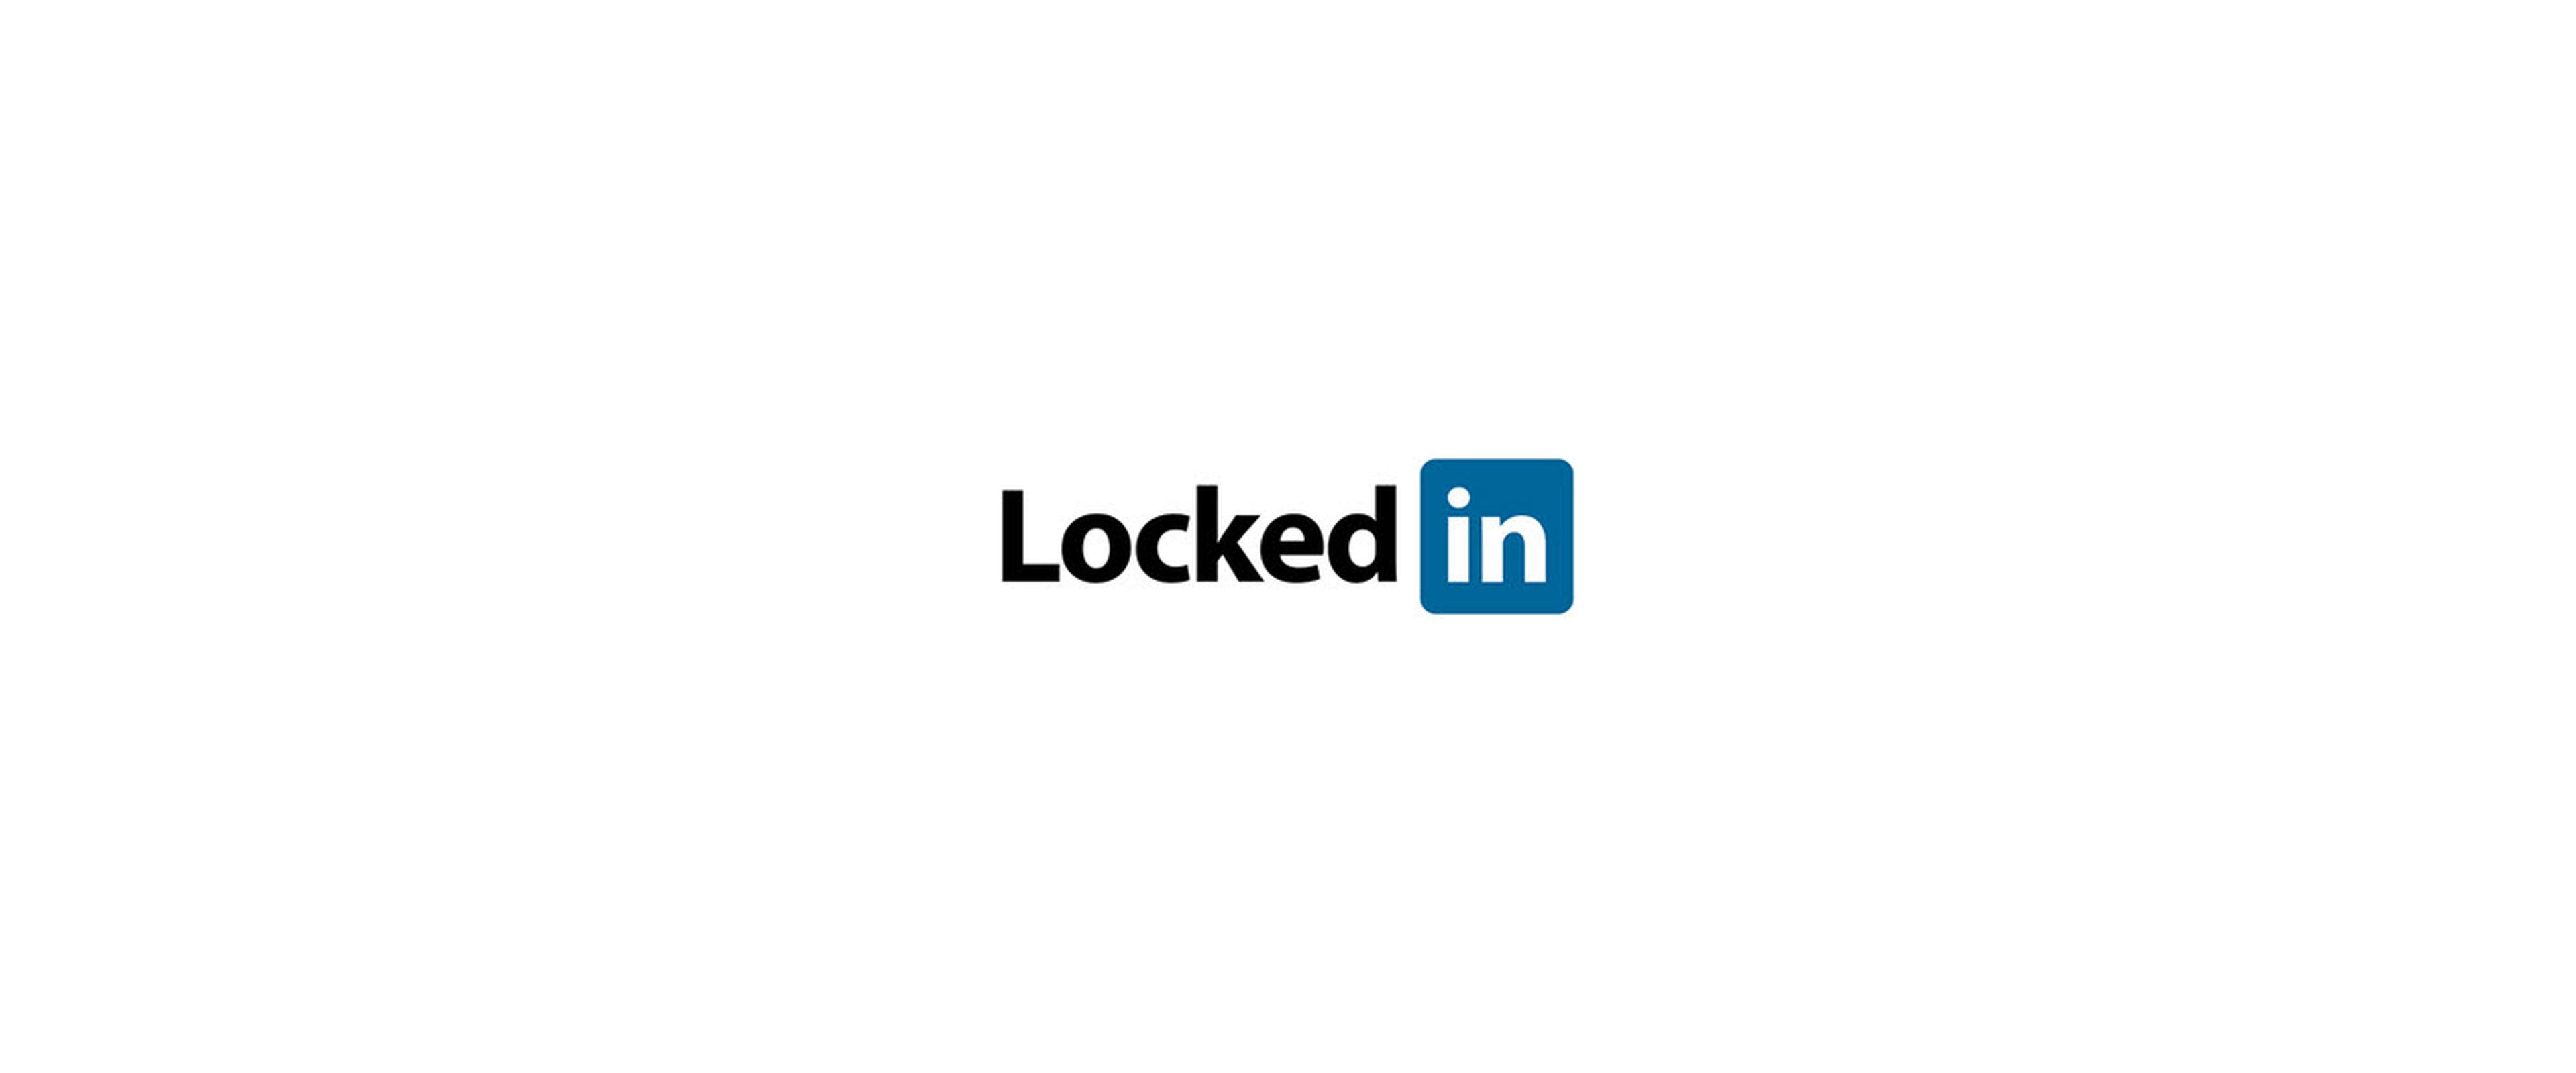 Logo de LinkedIn diseñado por Jure Tovrljan.